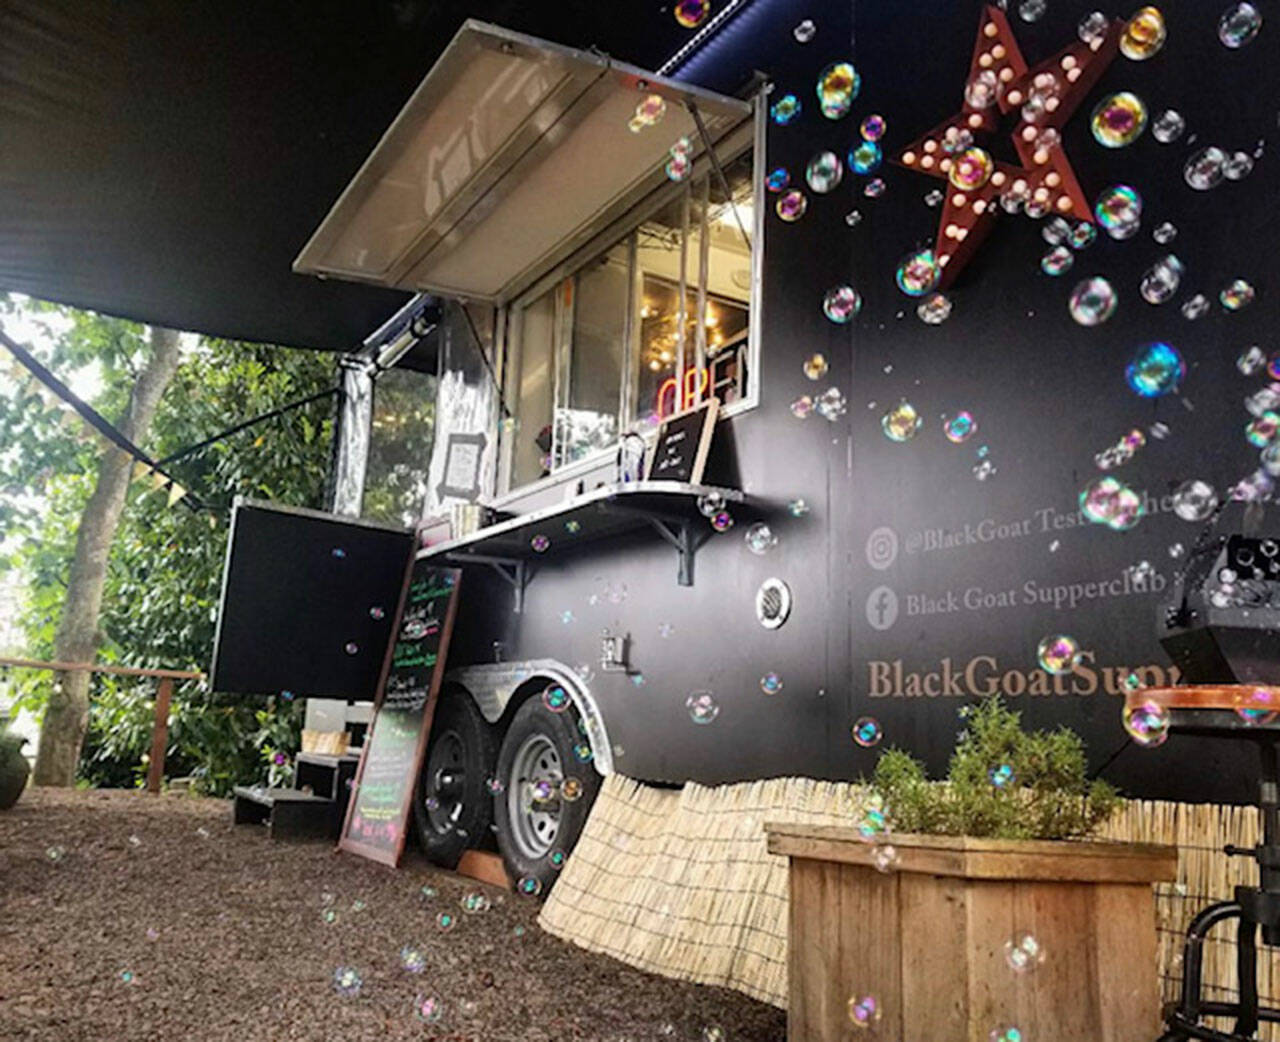 Tyler Shuey/North Kitsap Herald Photo
The Black Goat Test Kitchen food truck.